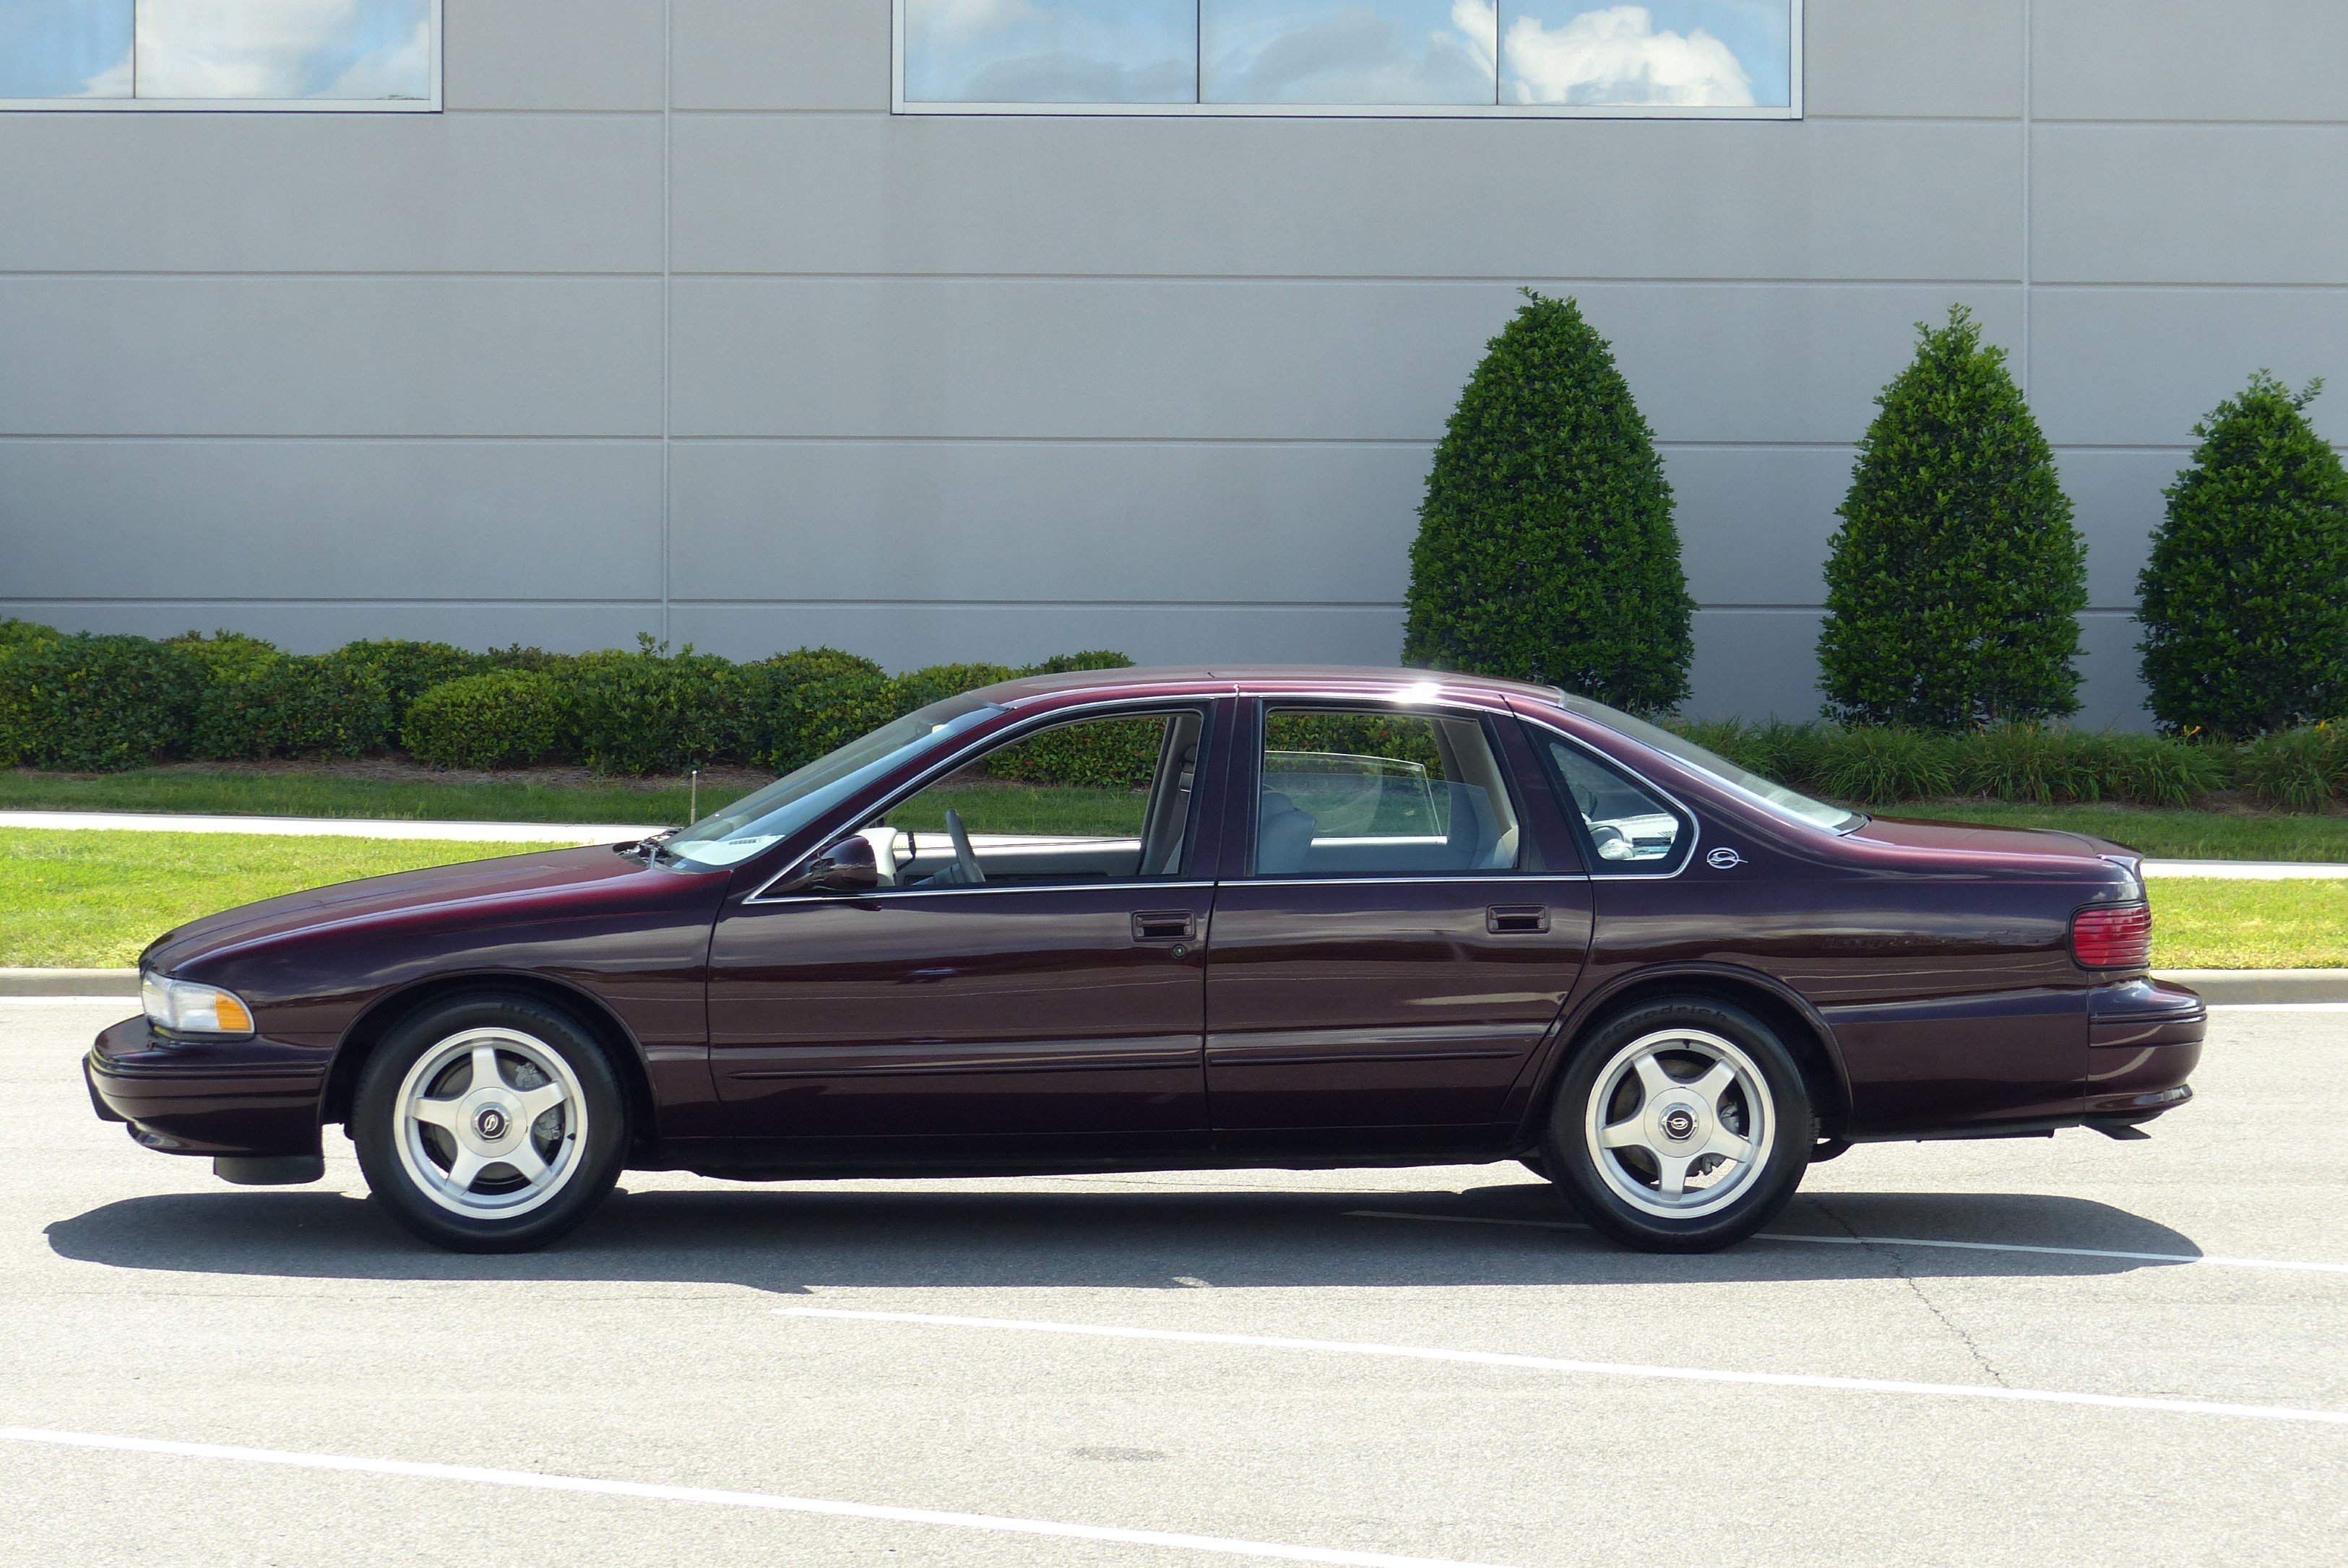 1995 Chevrolet Caprice | GAA Classic Cars